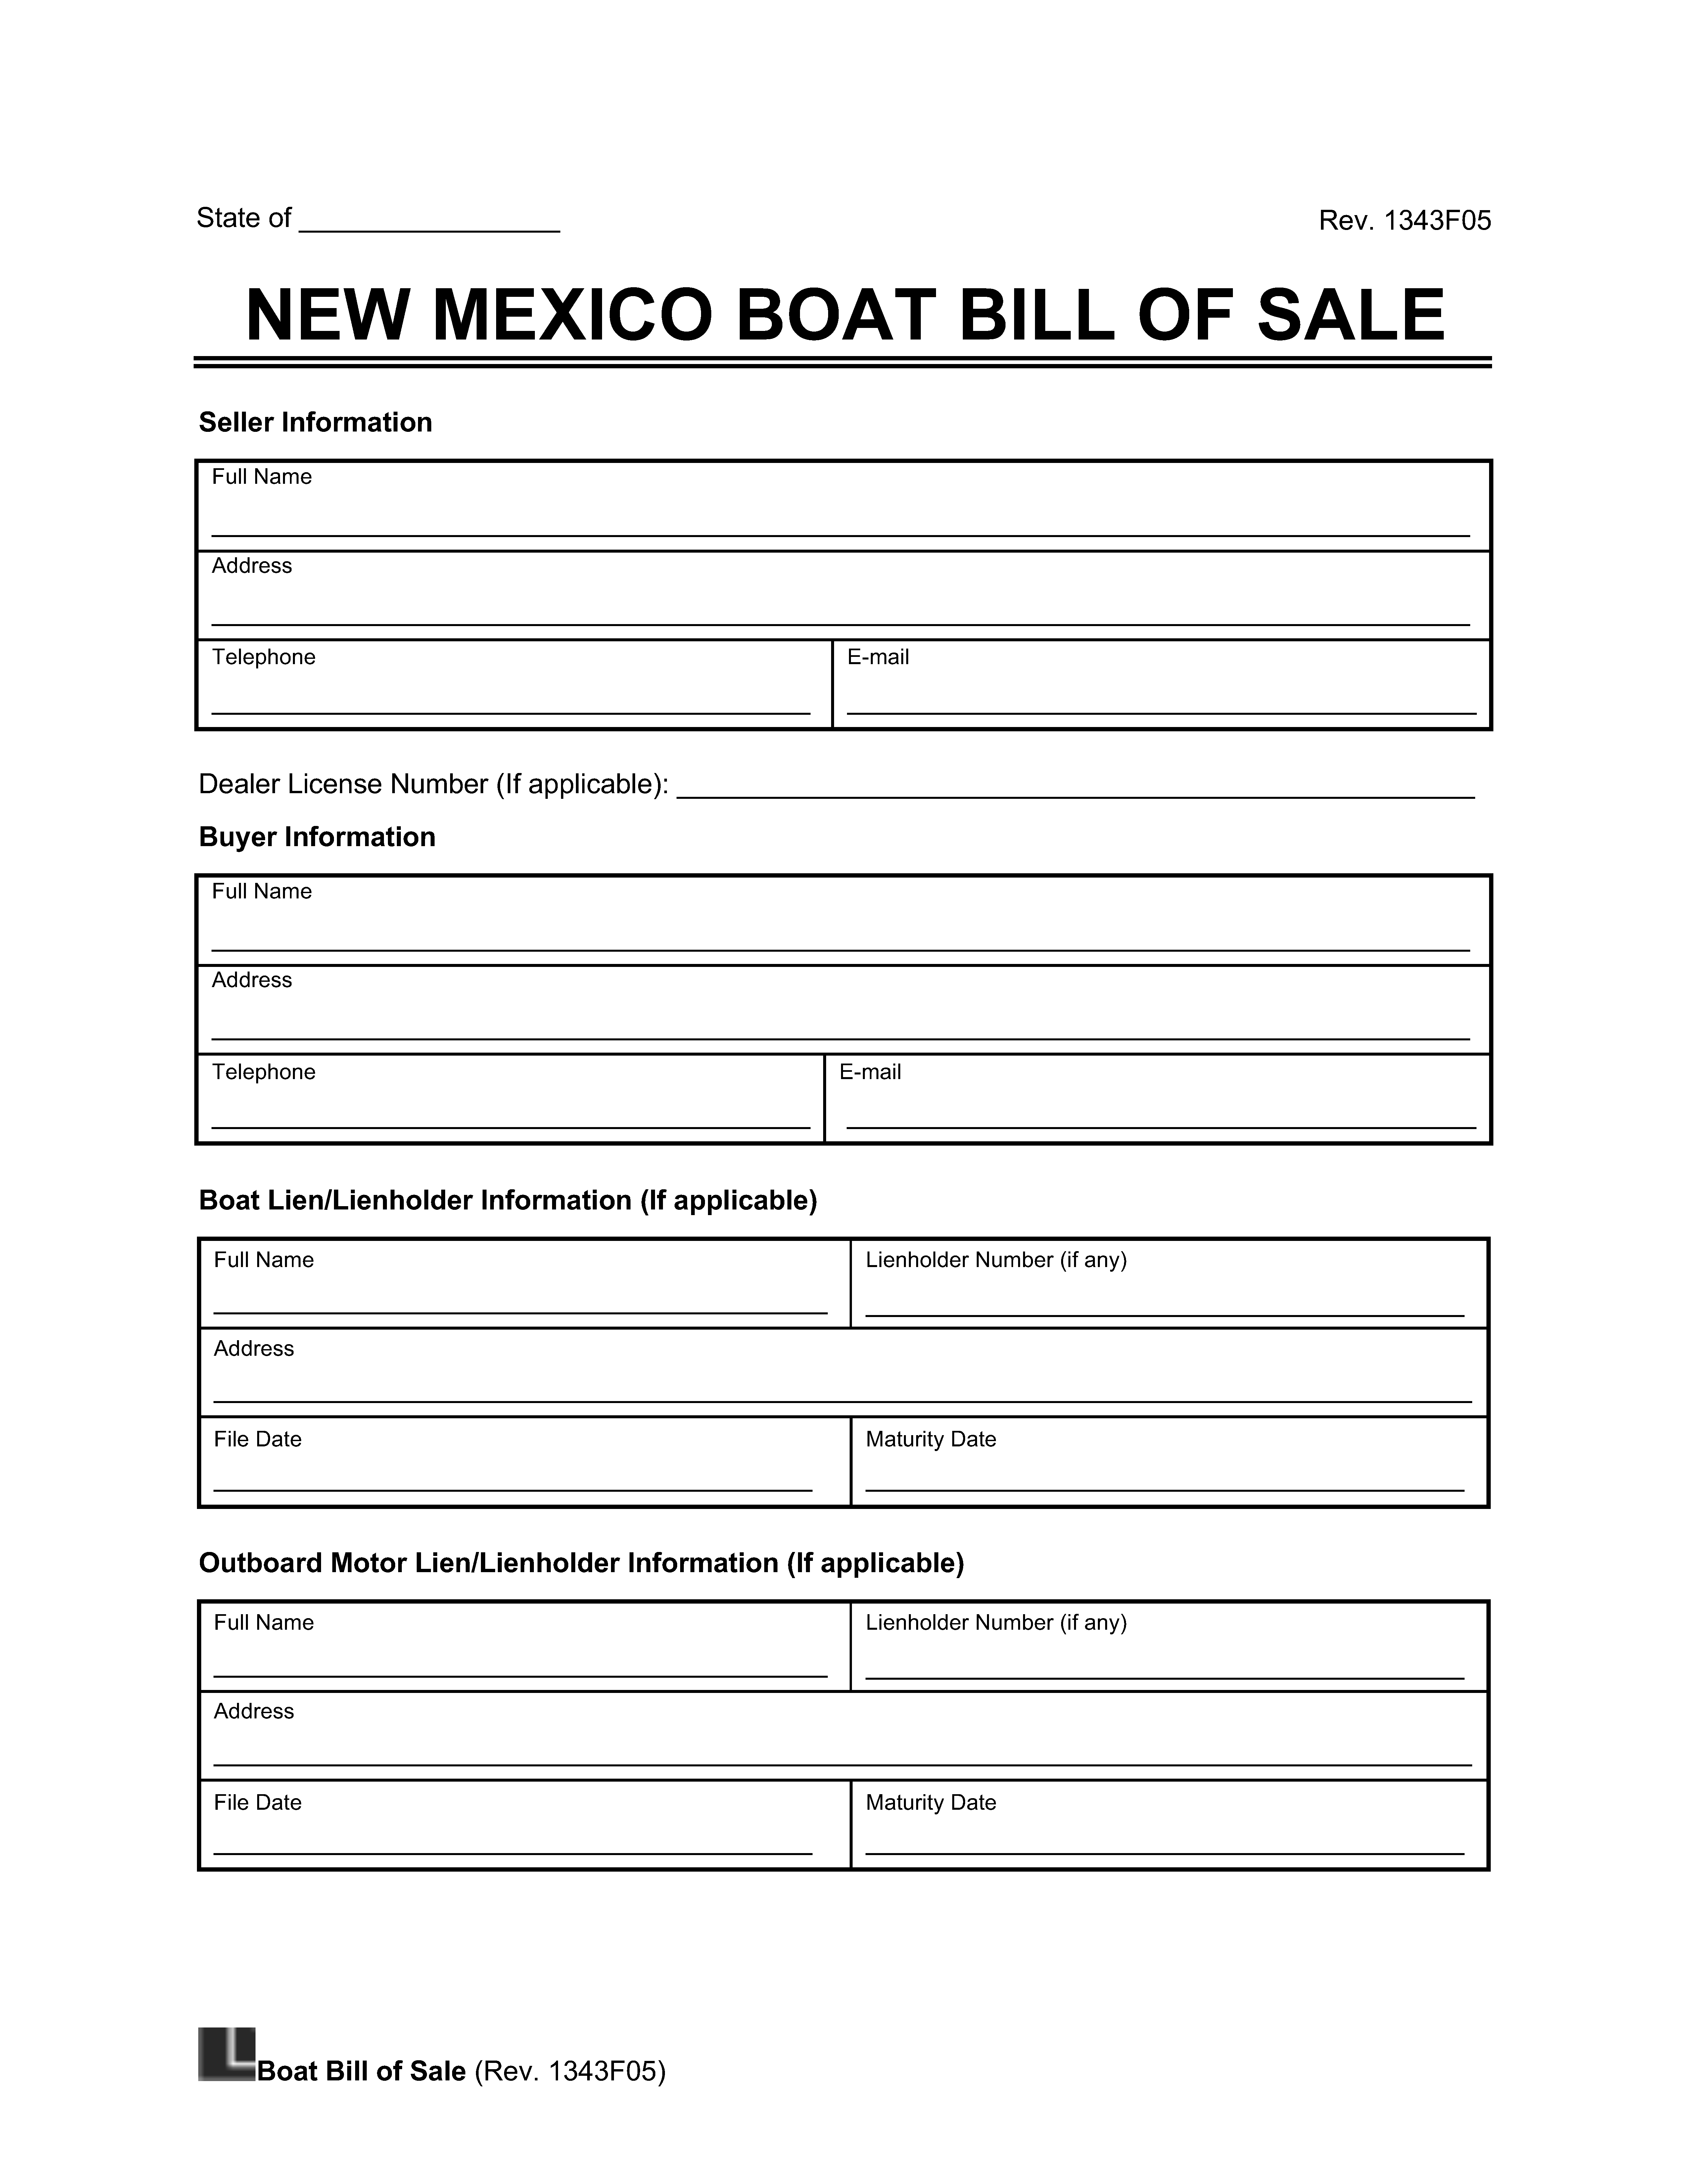 Boat Bill of Sale New Mexico screenshot